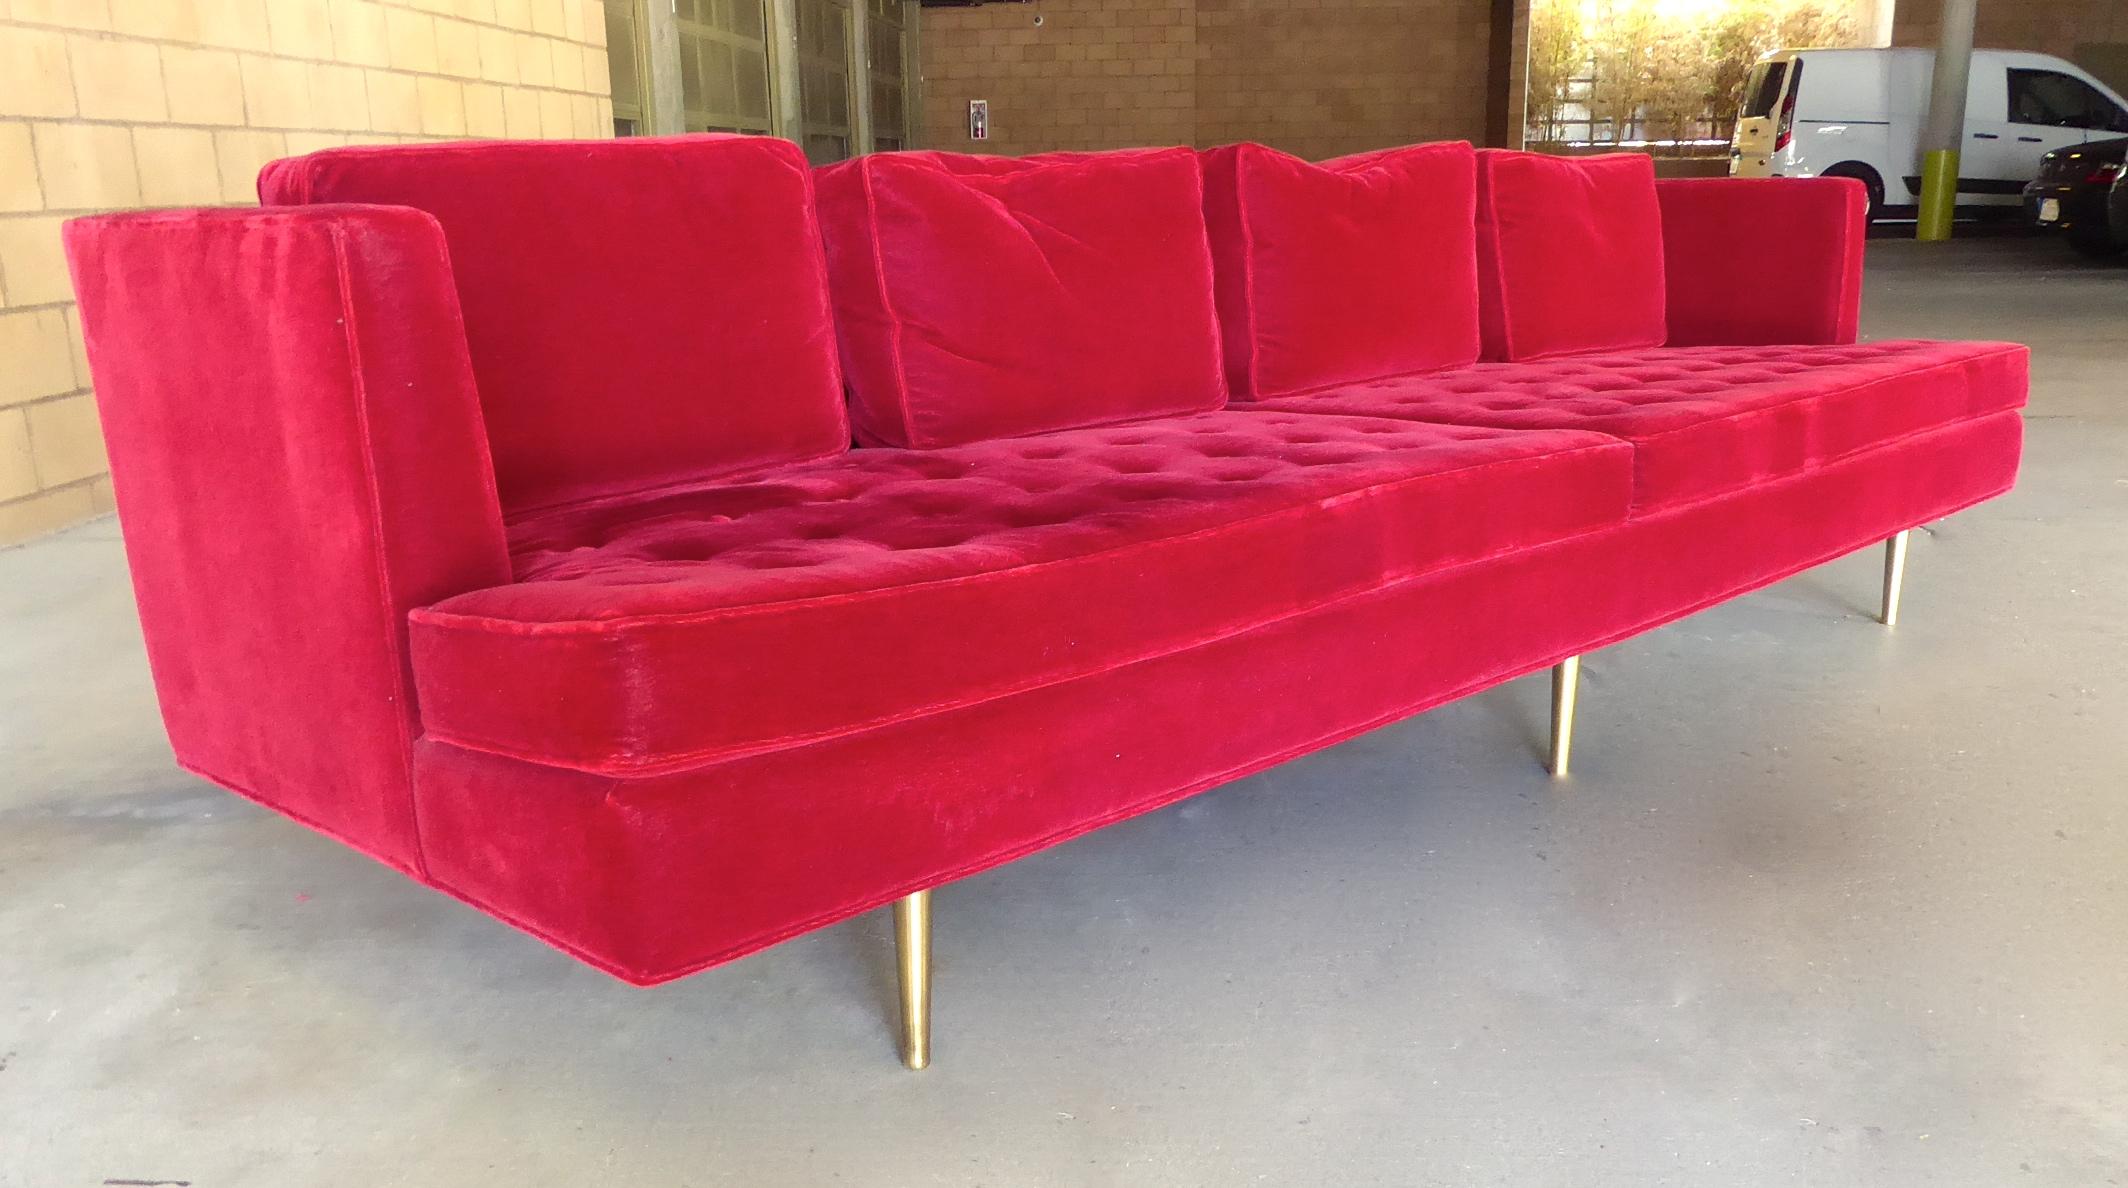 chamberlain sofa